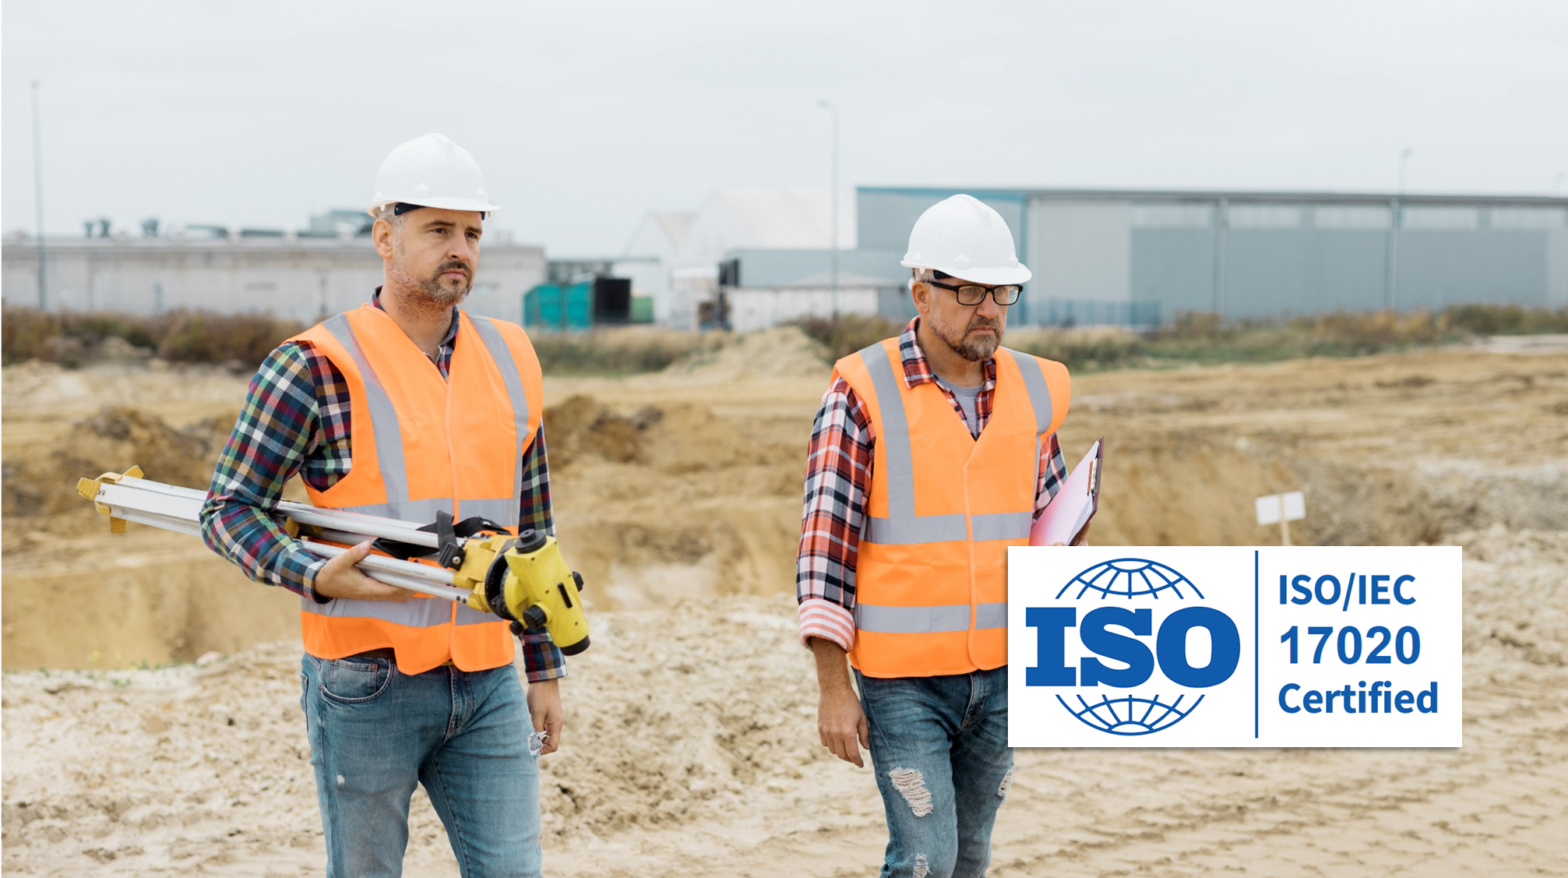 ISO/IEC 17020